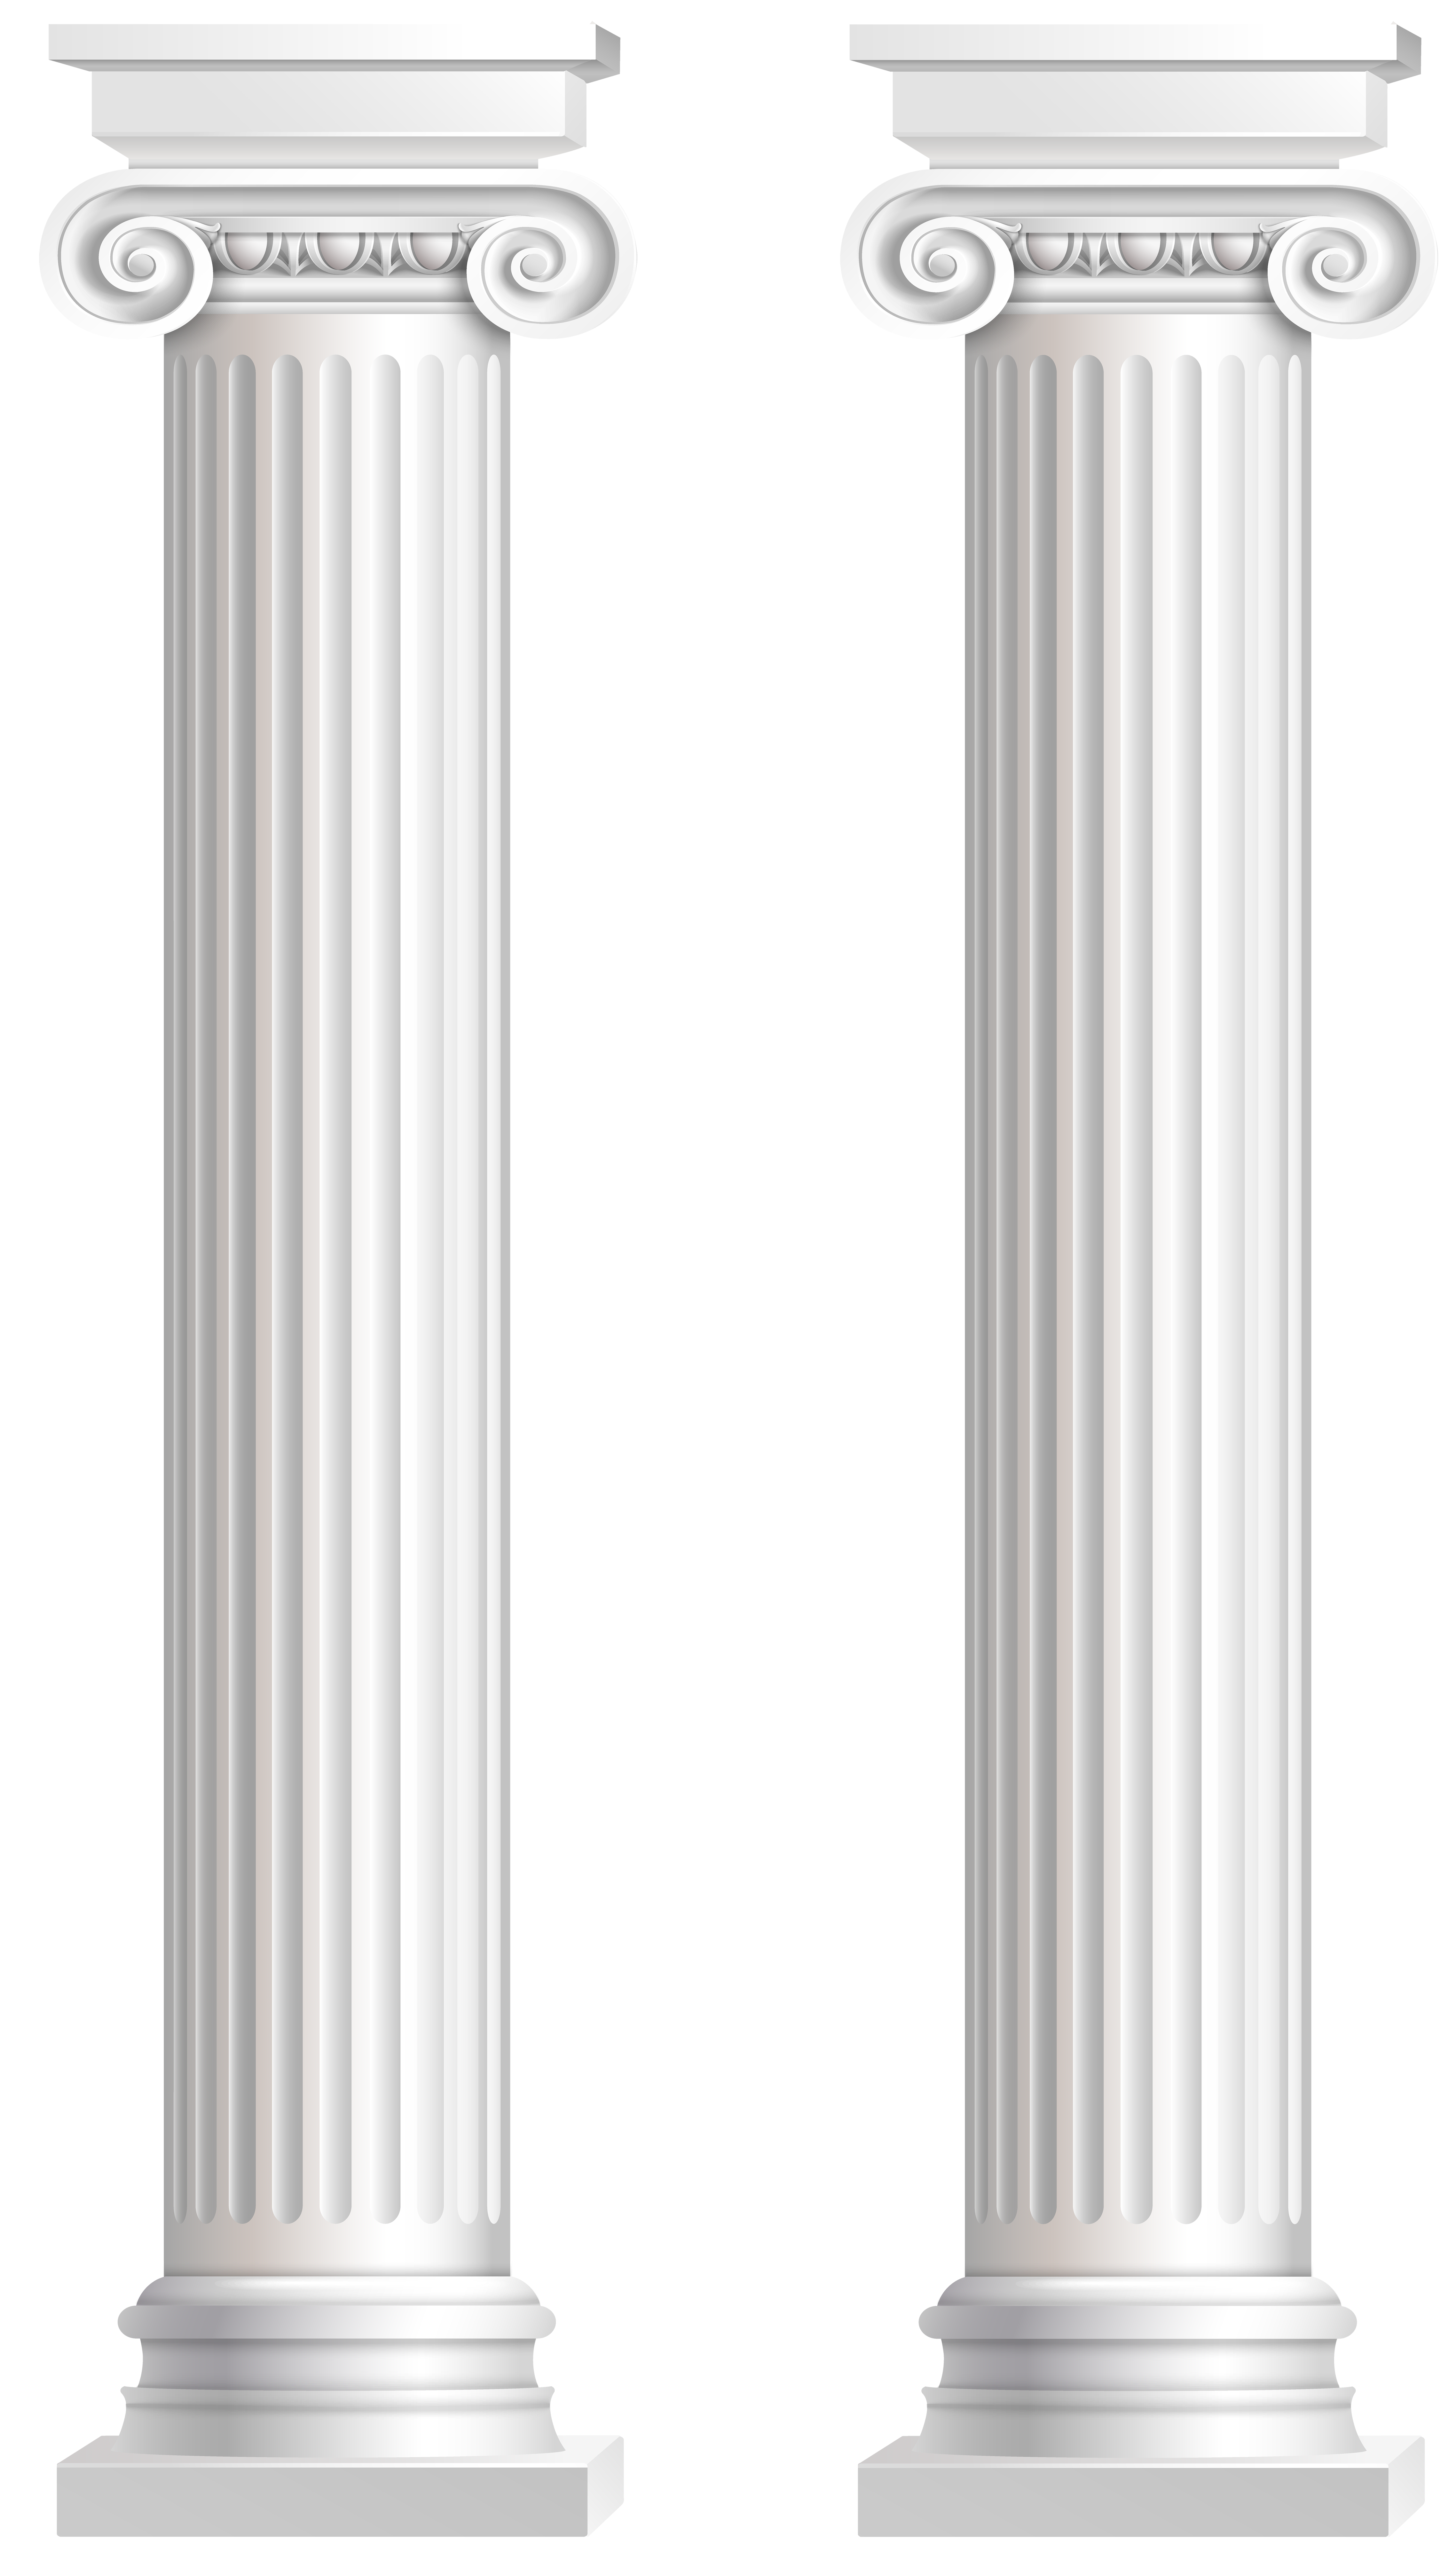 Pillars Png Free & Free Pillars.png Transparent Images #17664.